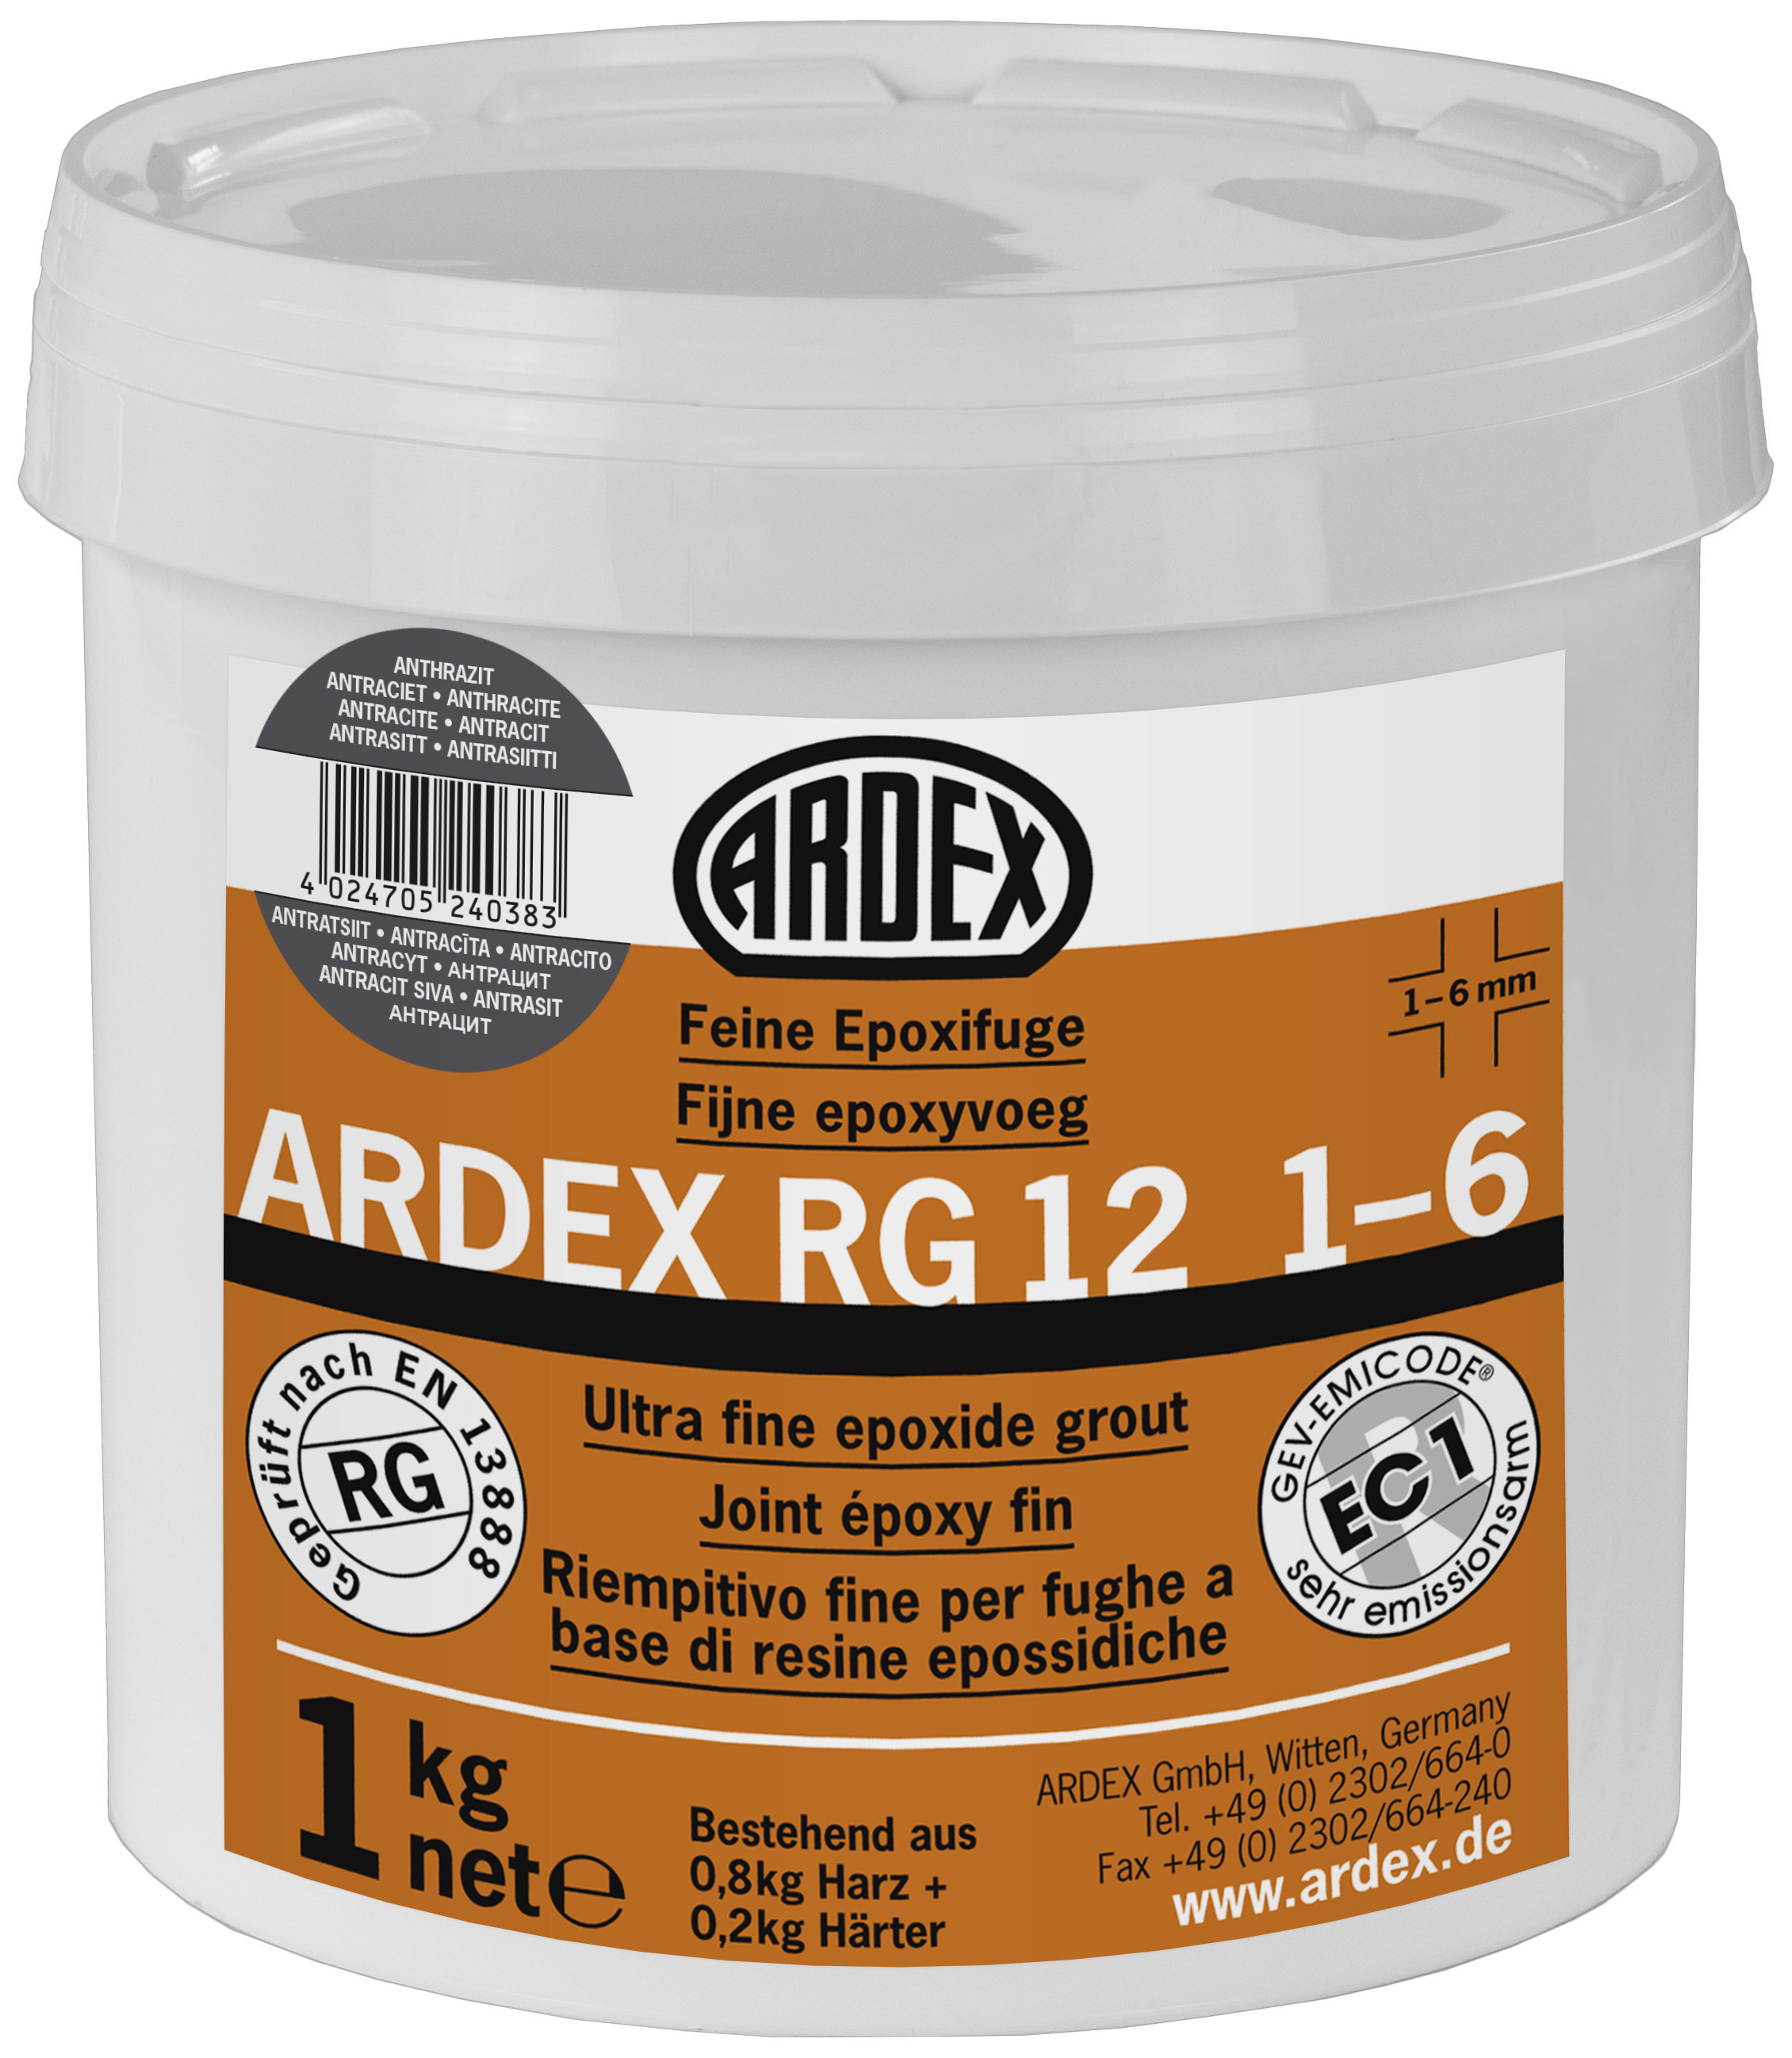 ARDEX RG12 Feine Epoxifuge